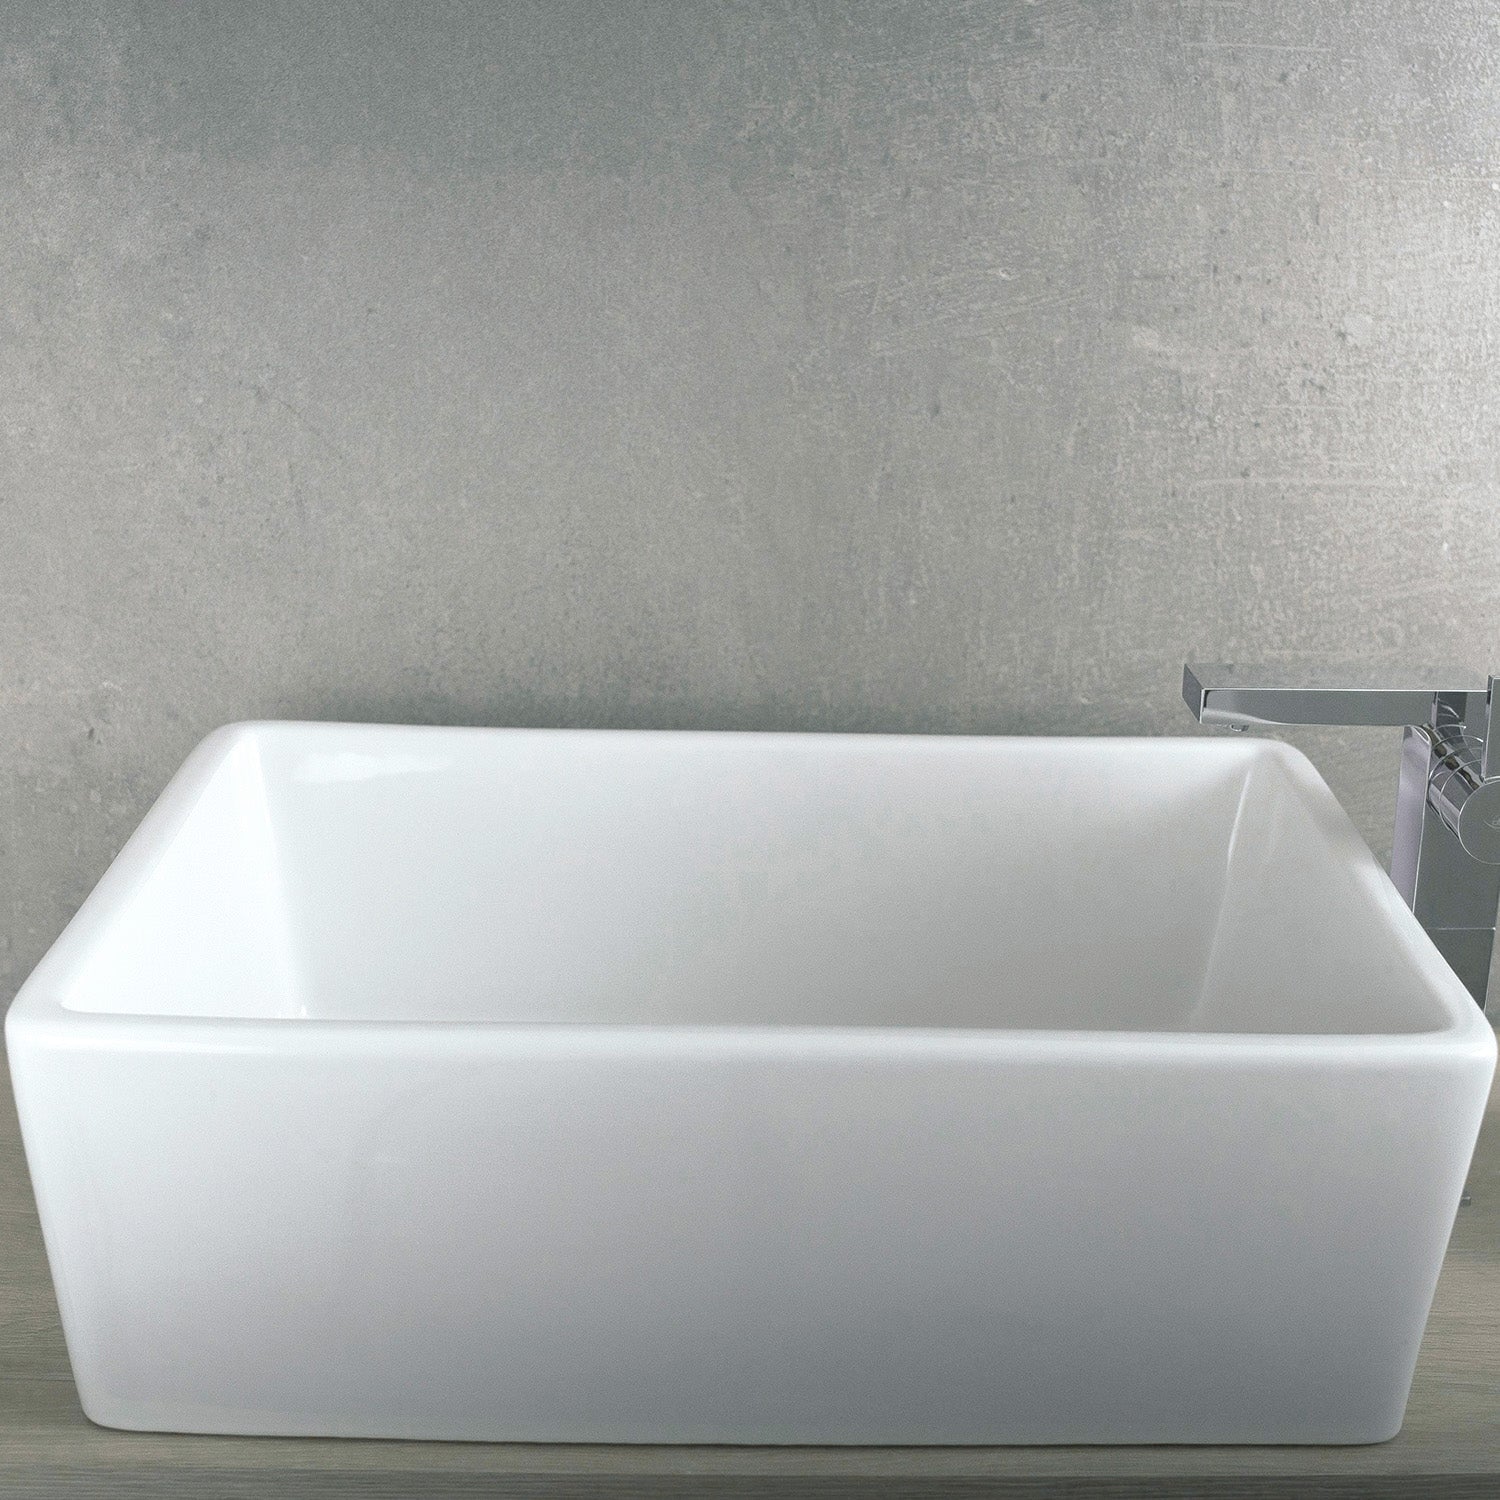 DAX Ceramic Rectangle Single Bowl Bathroom Vessel Sink, White Finish, 24-9/16 x 16-1/8 x 6-1/2 Inches (BSN-285K)